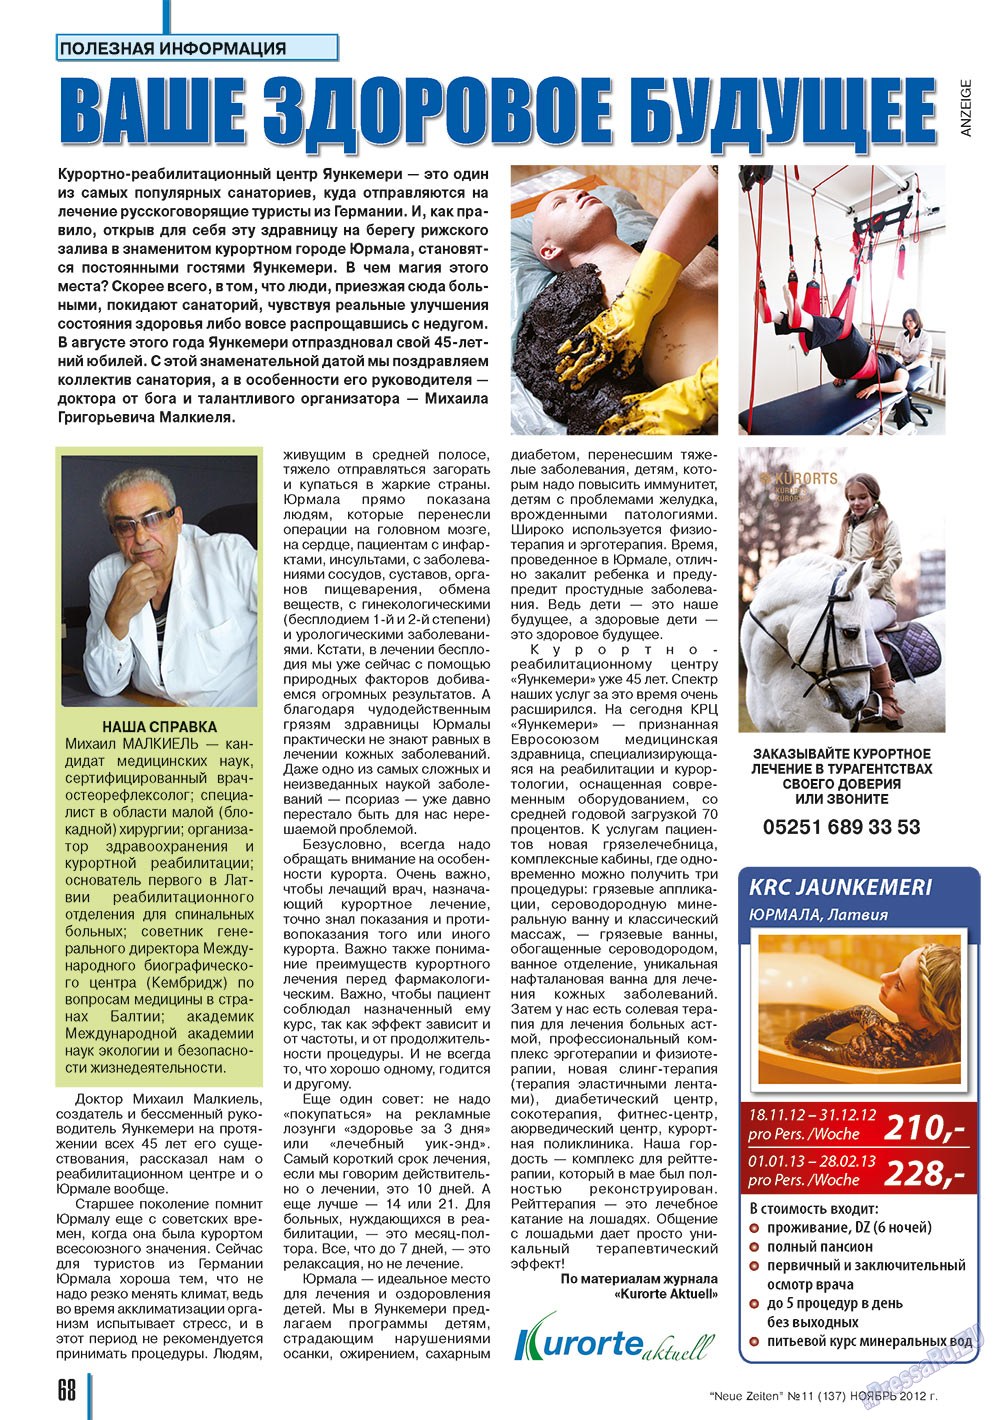 Neue Zeiten (журнал). 2012 год, номер 11, стр. 68